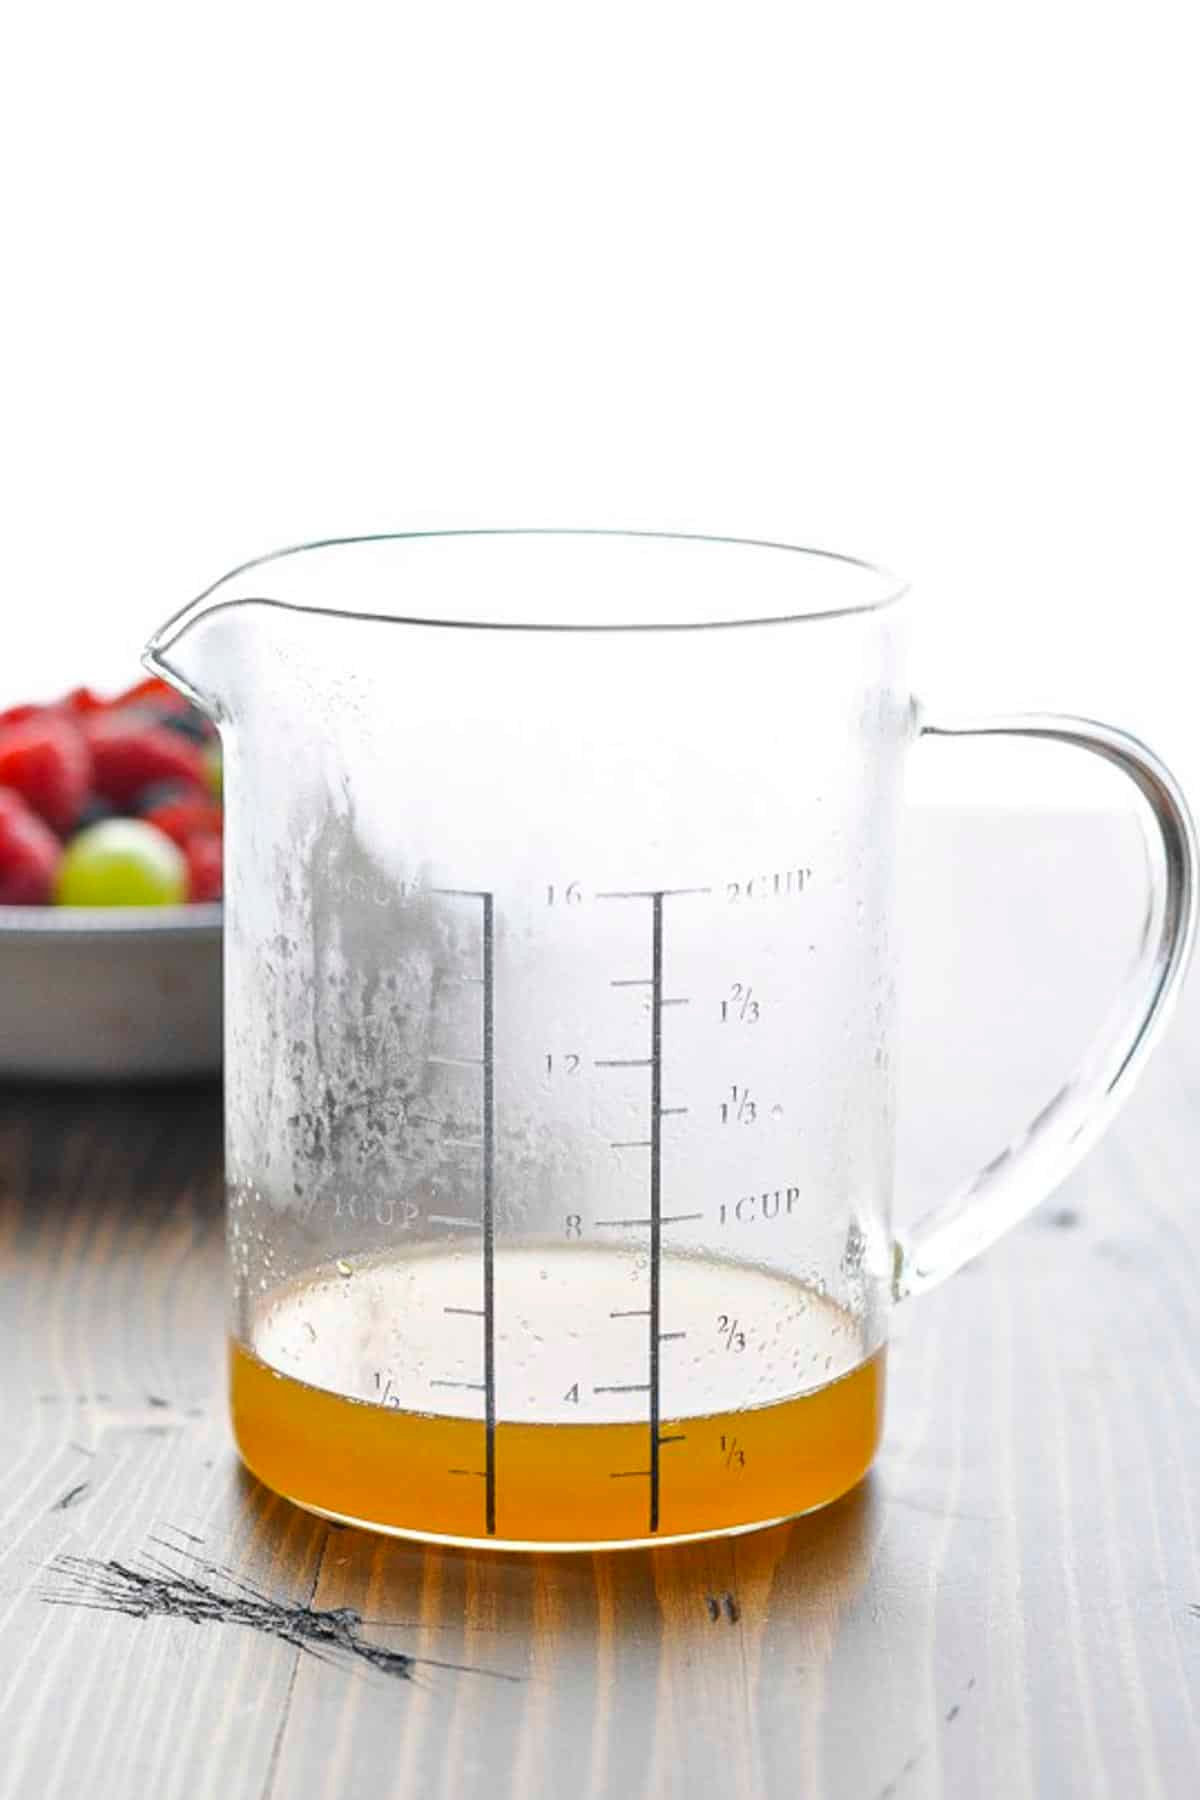 Honey lemon fruit salad dressing in a glass measuring cup.